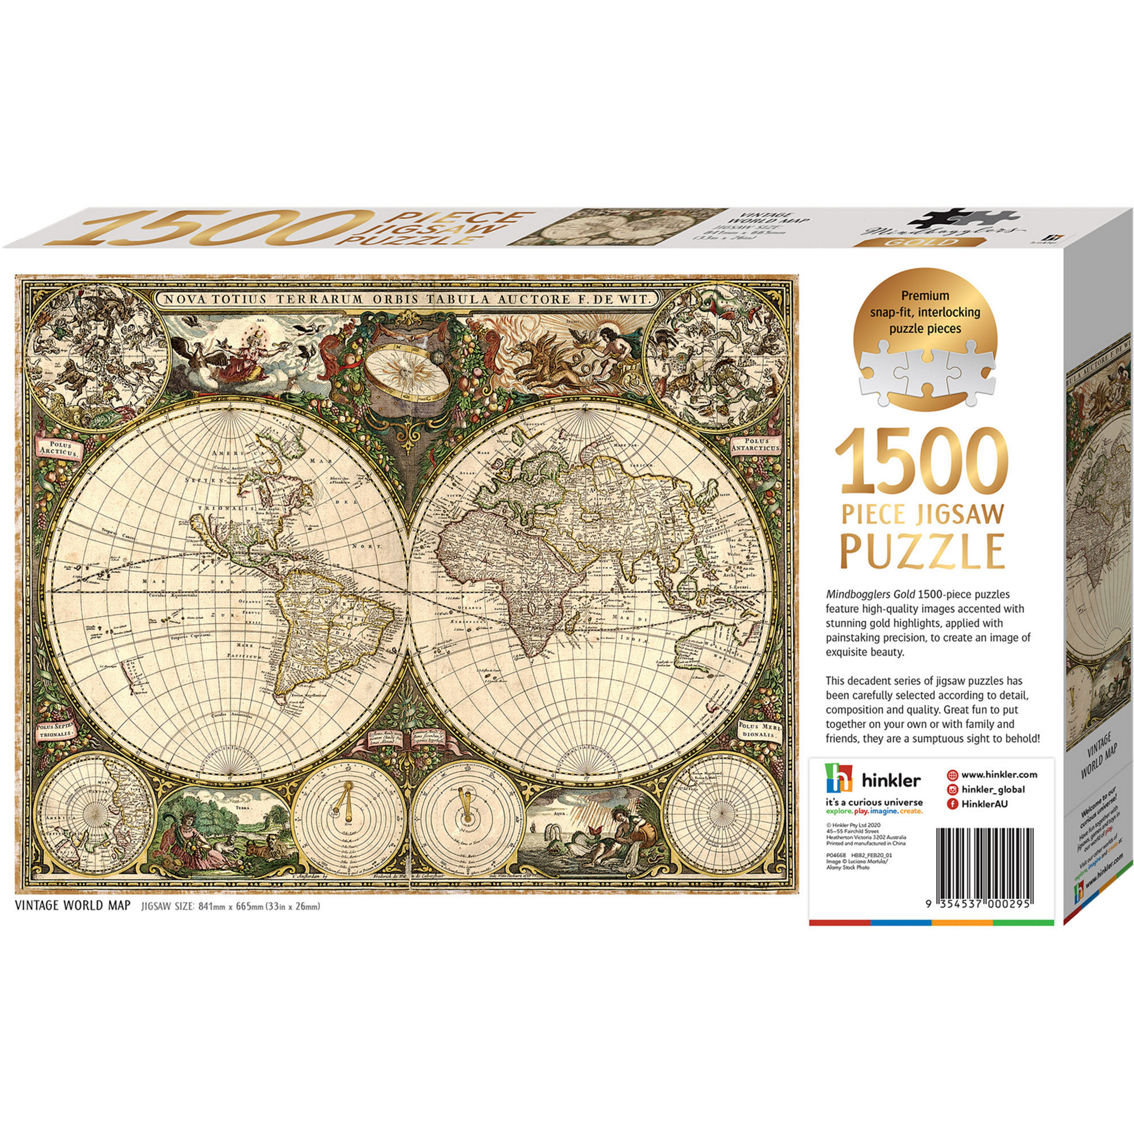 Mindbogglers Gold: Vintage World Map 1500 pc. Puzzle - Image 2 of 8